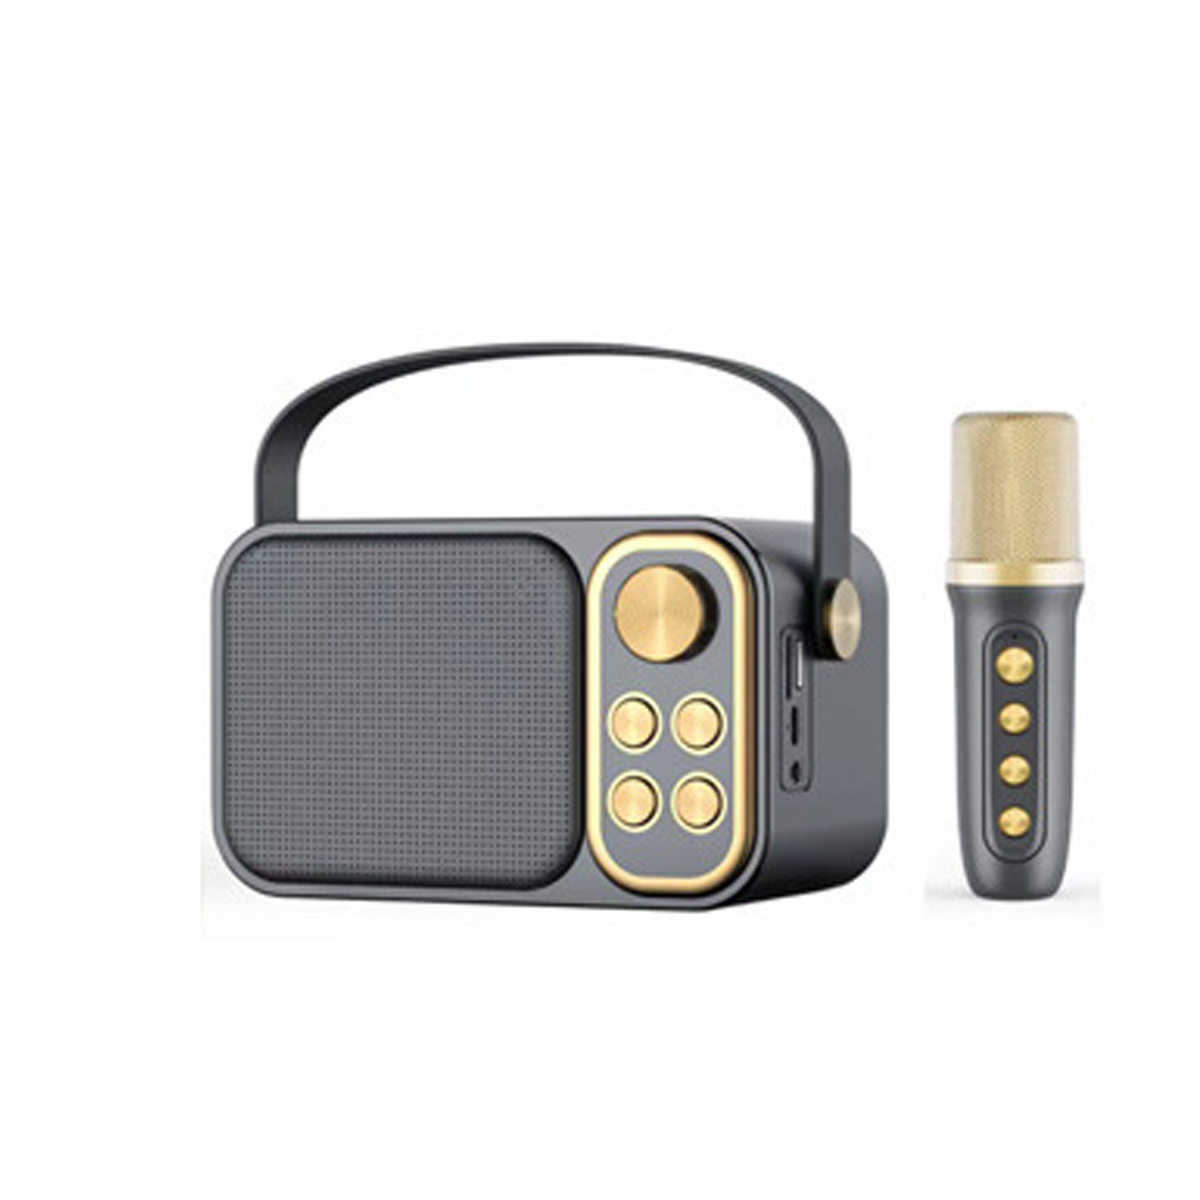 Gesang all-in-one Subwoofer drahtlosen Bluetooth-Lautsprecher Mikrofon Lautsprecher Freien im Song K SYNTEK Gold Bluetooth-Lautsprecher,